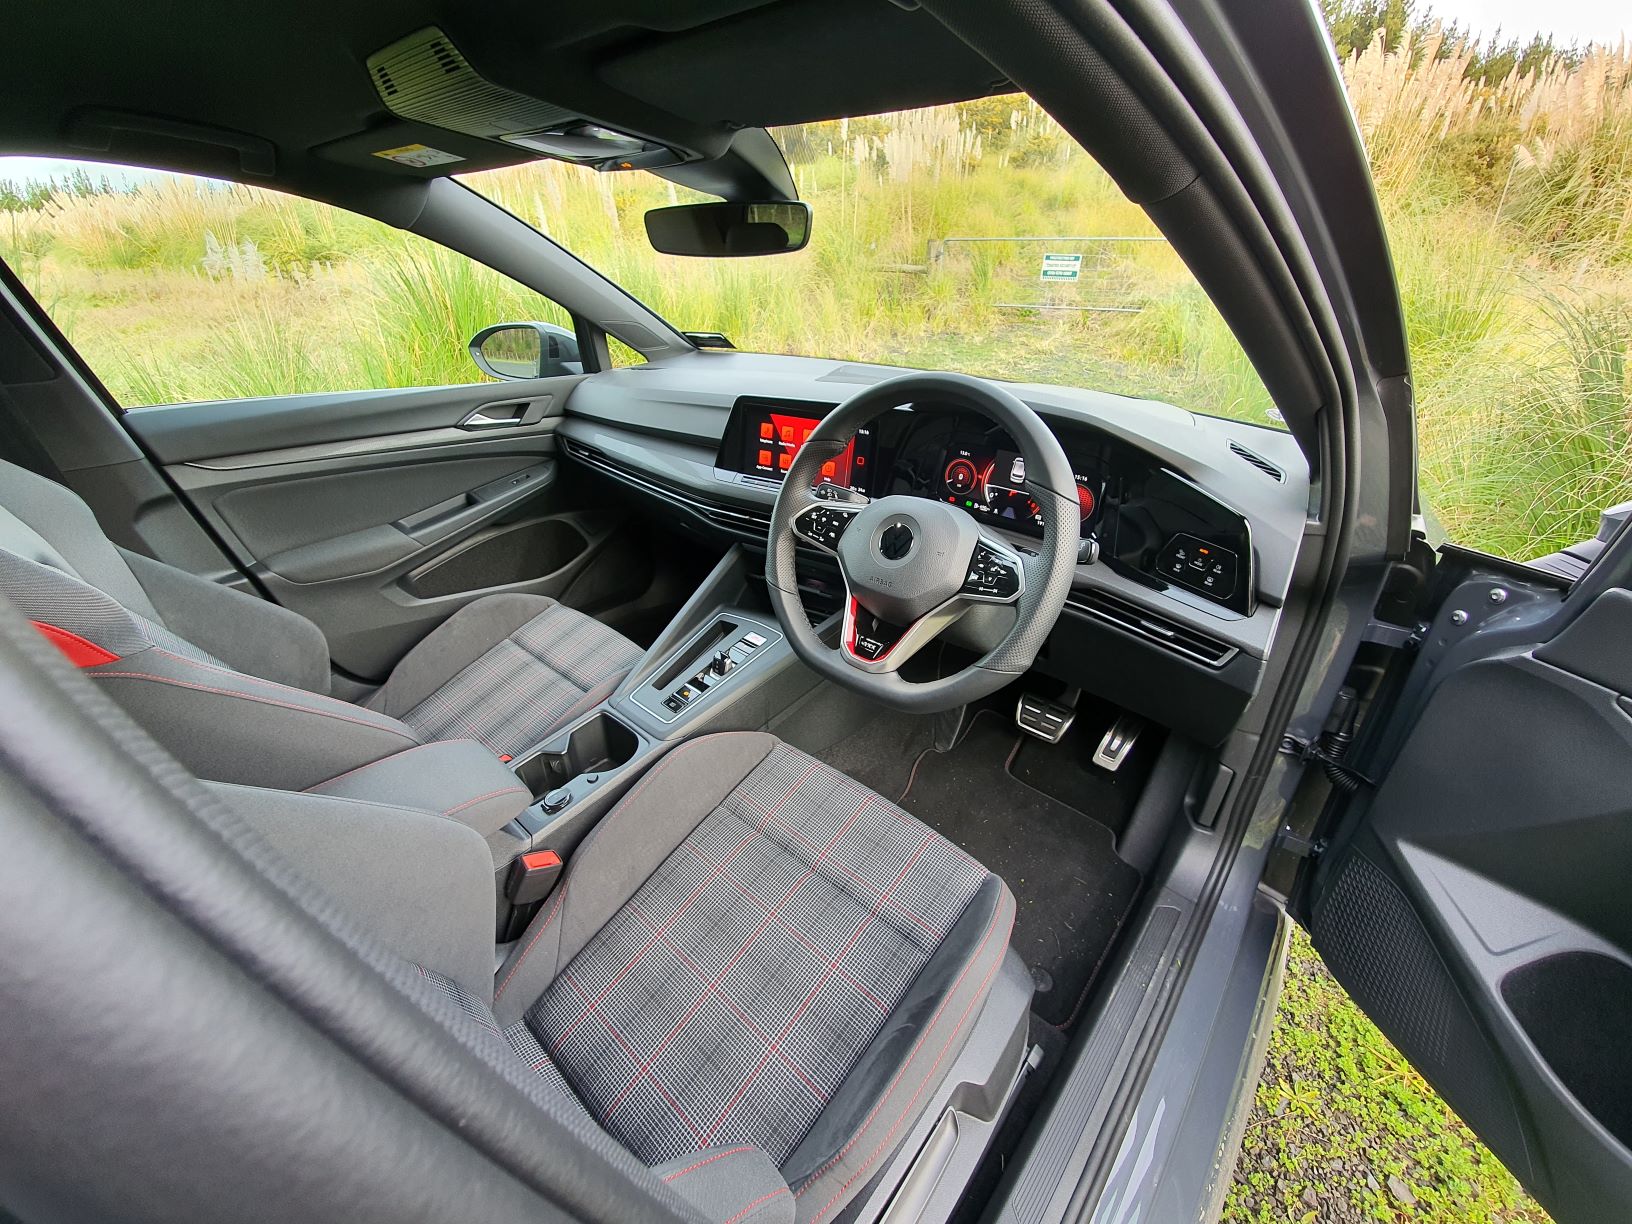 Interior of the MK8 Golf GTI